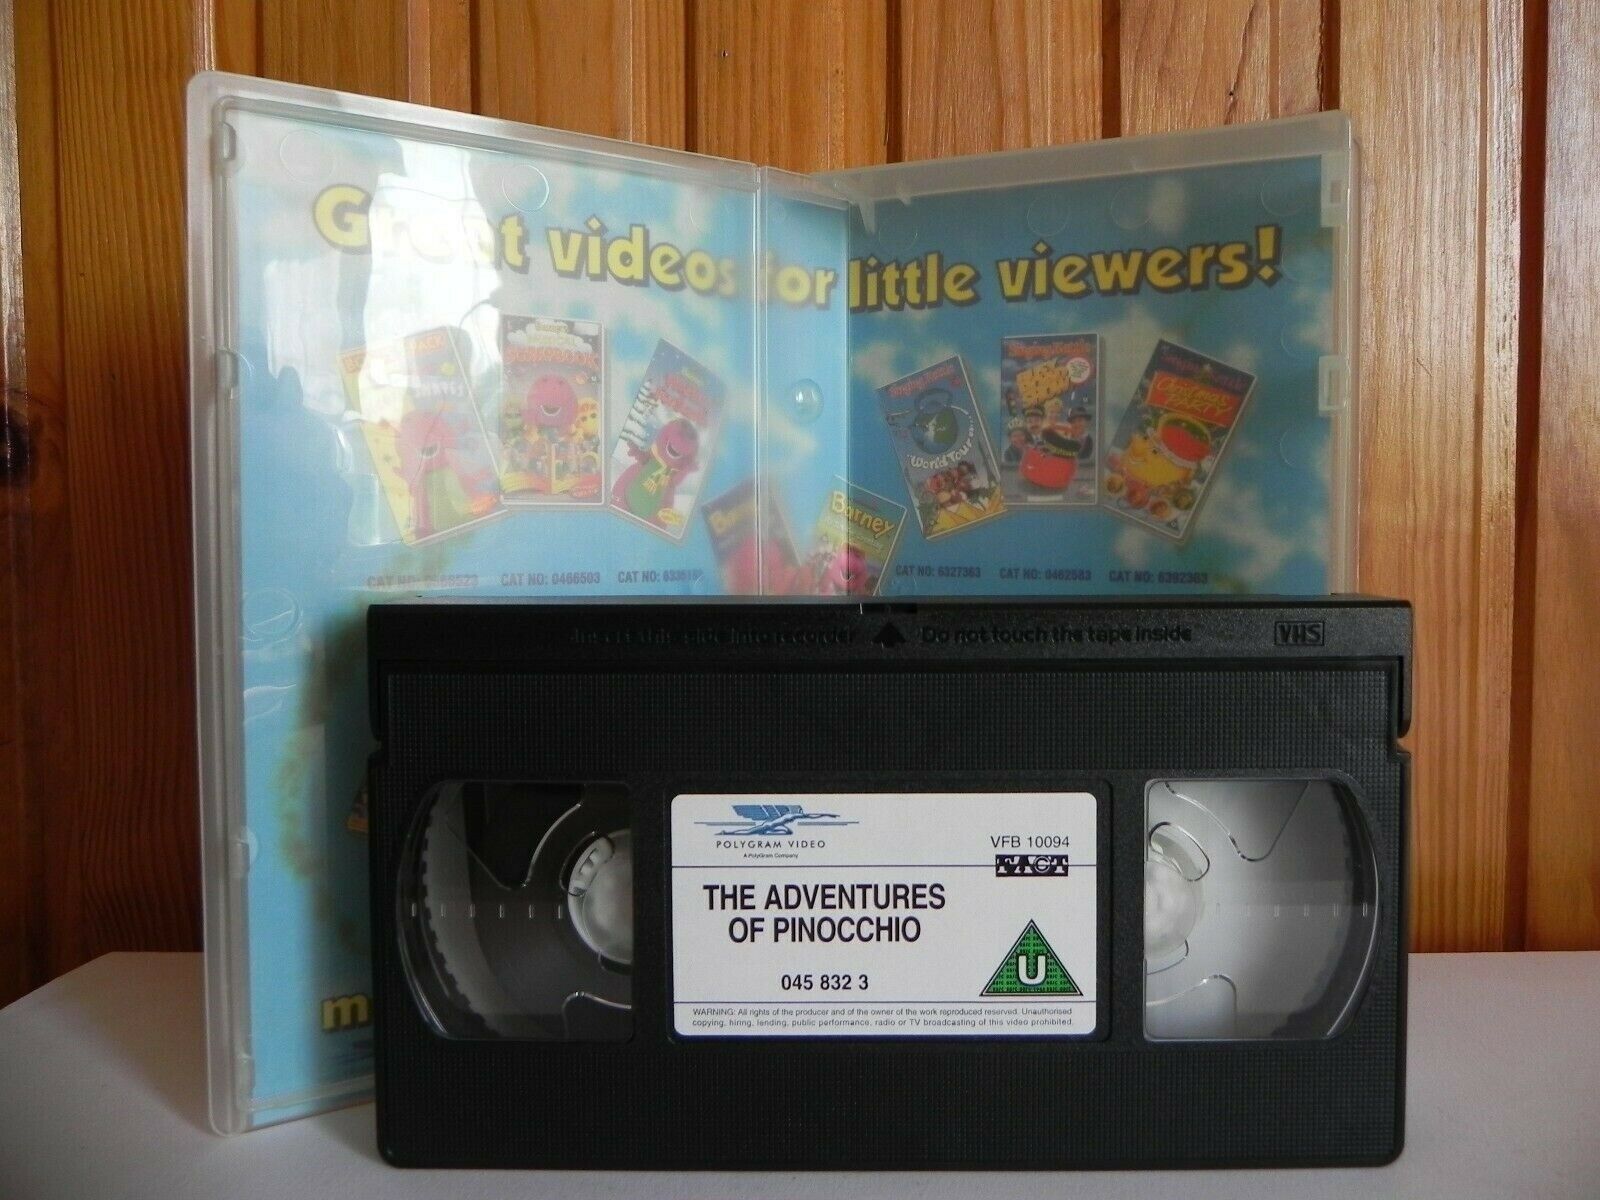 The Adventures Of Pinocchio - PolyGram - Martin Landrau - Genevieve Bujold - VHS-